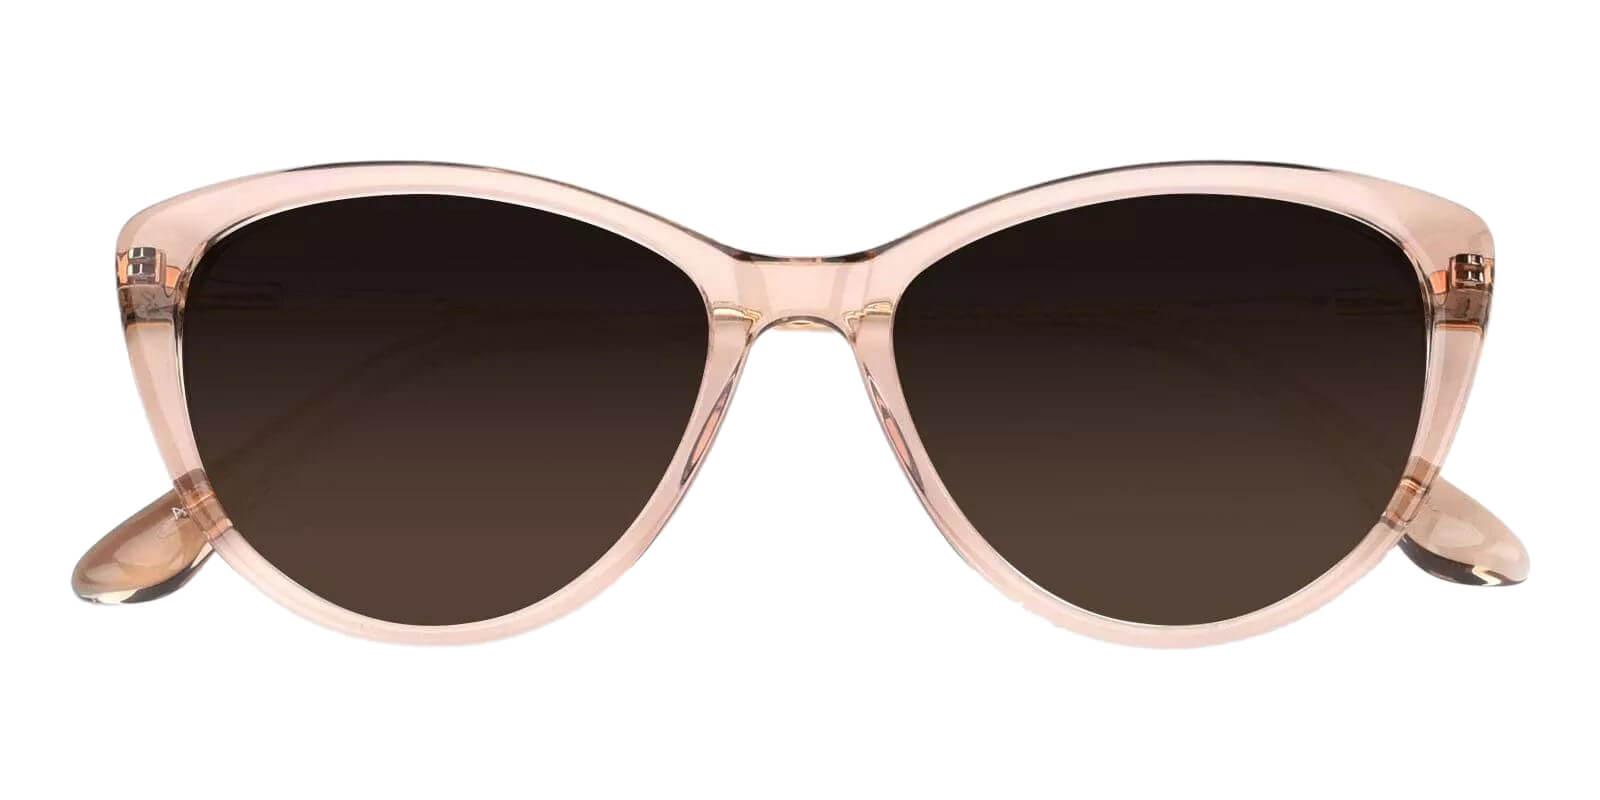 Benson Pink Combination Fashion , SpringHinges , Sunglasses , UniversalBridgeFit Frames from ABBE Glasses